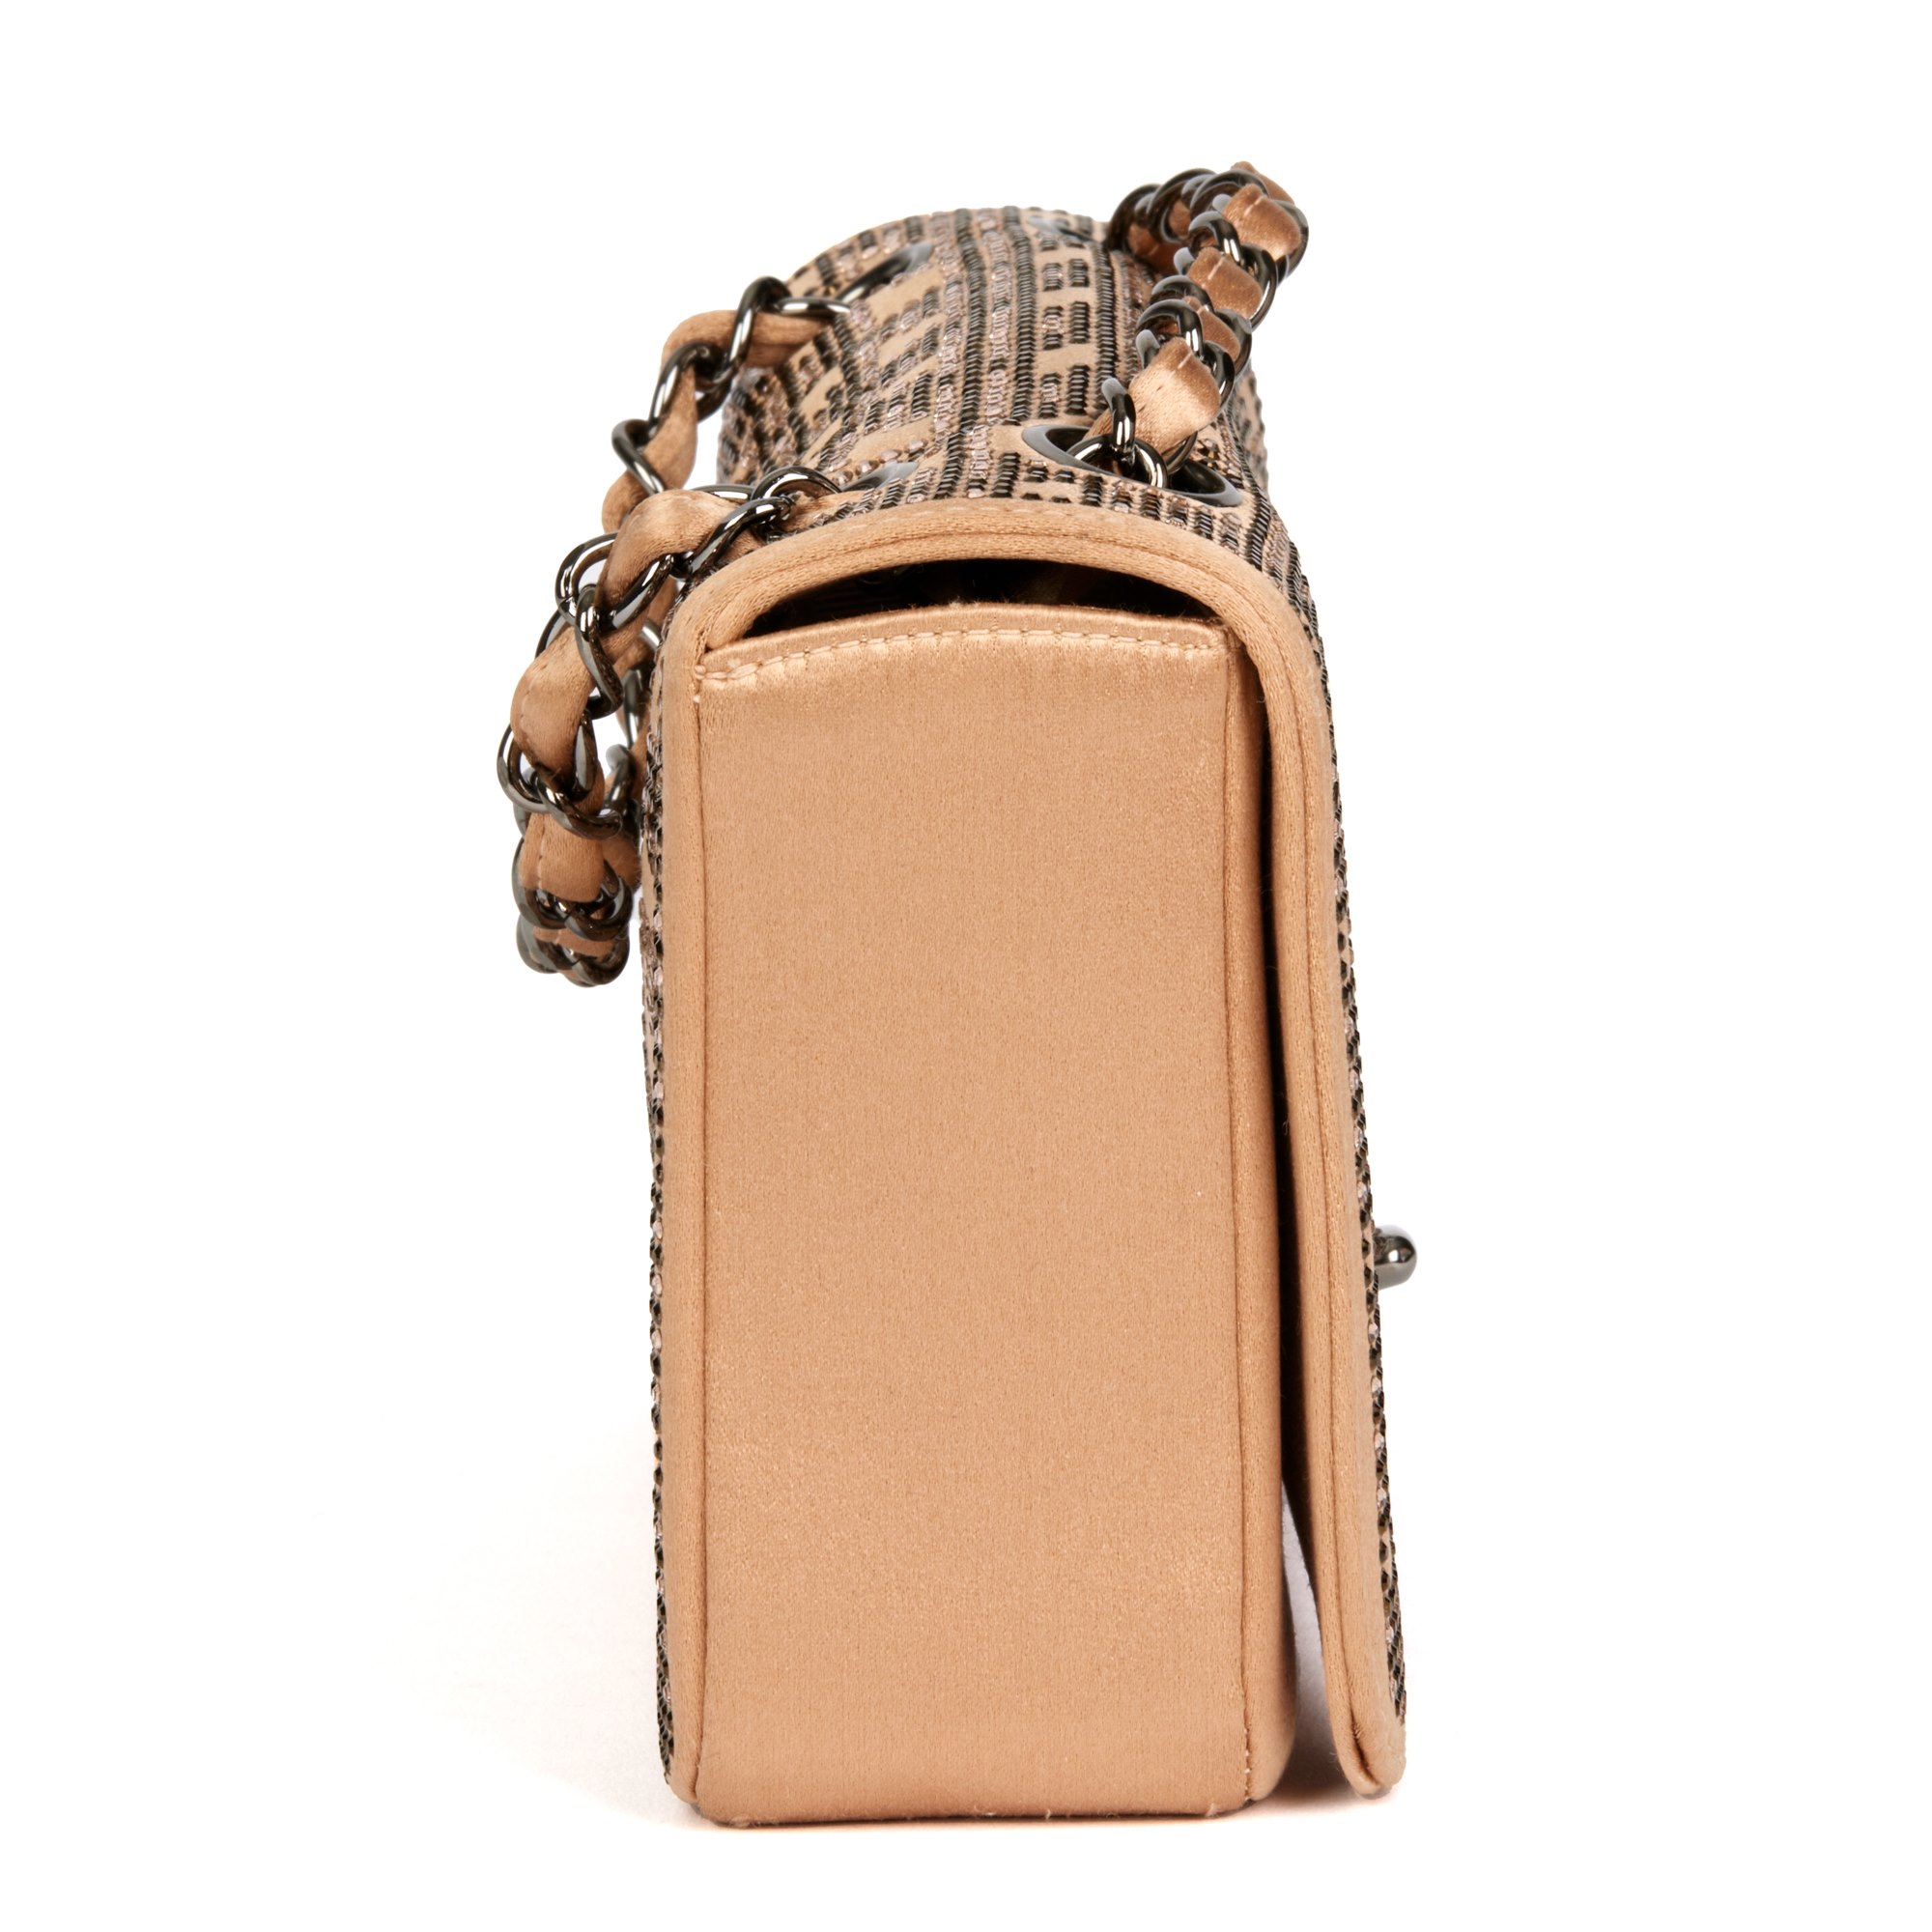 Chanel Naked Nude Swarovski Strass Satin Vintage Mini Flap Bag